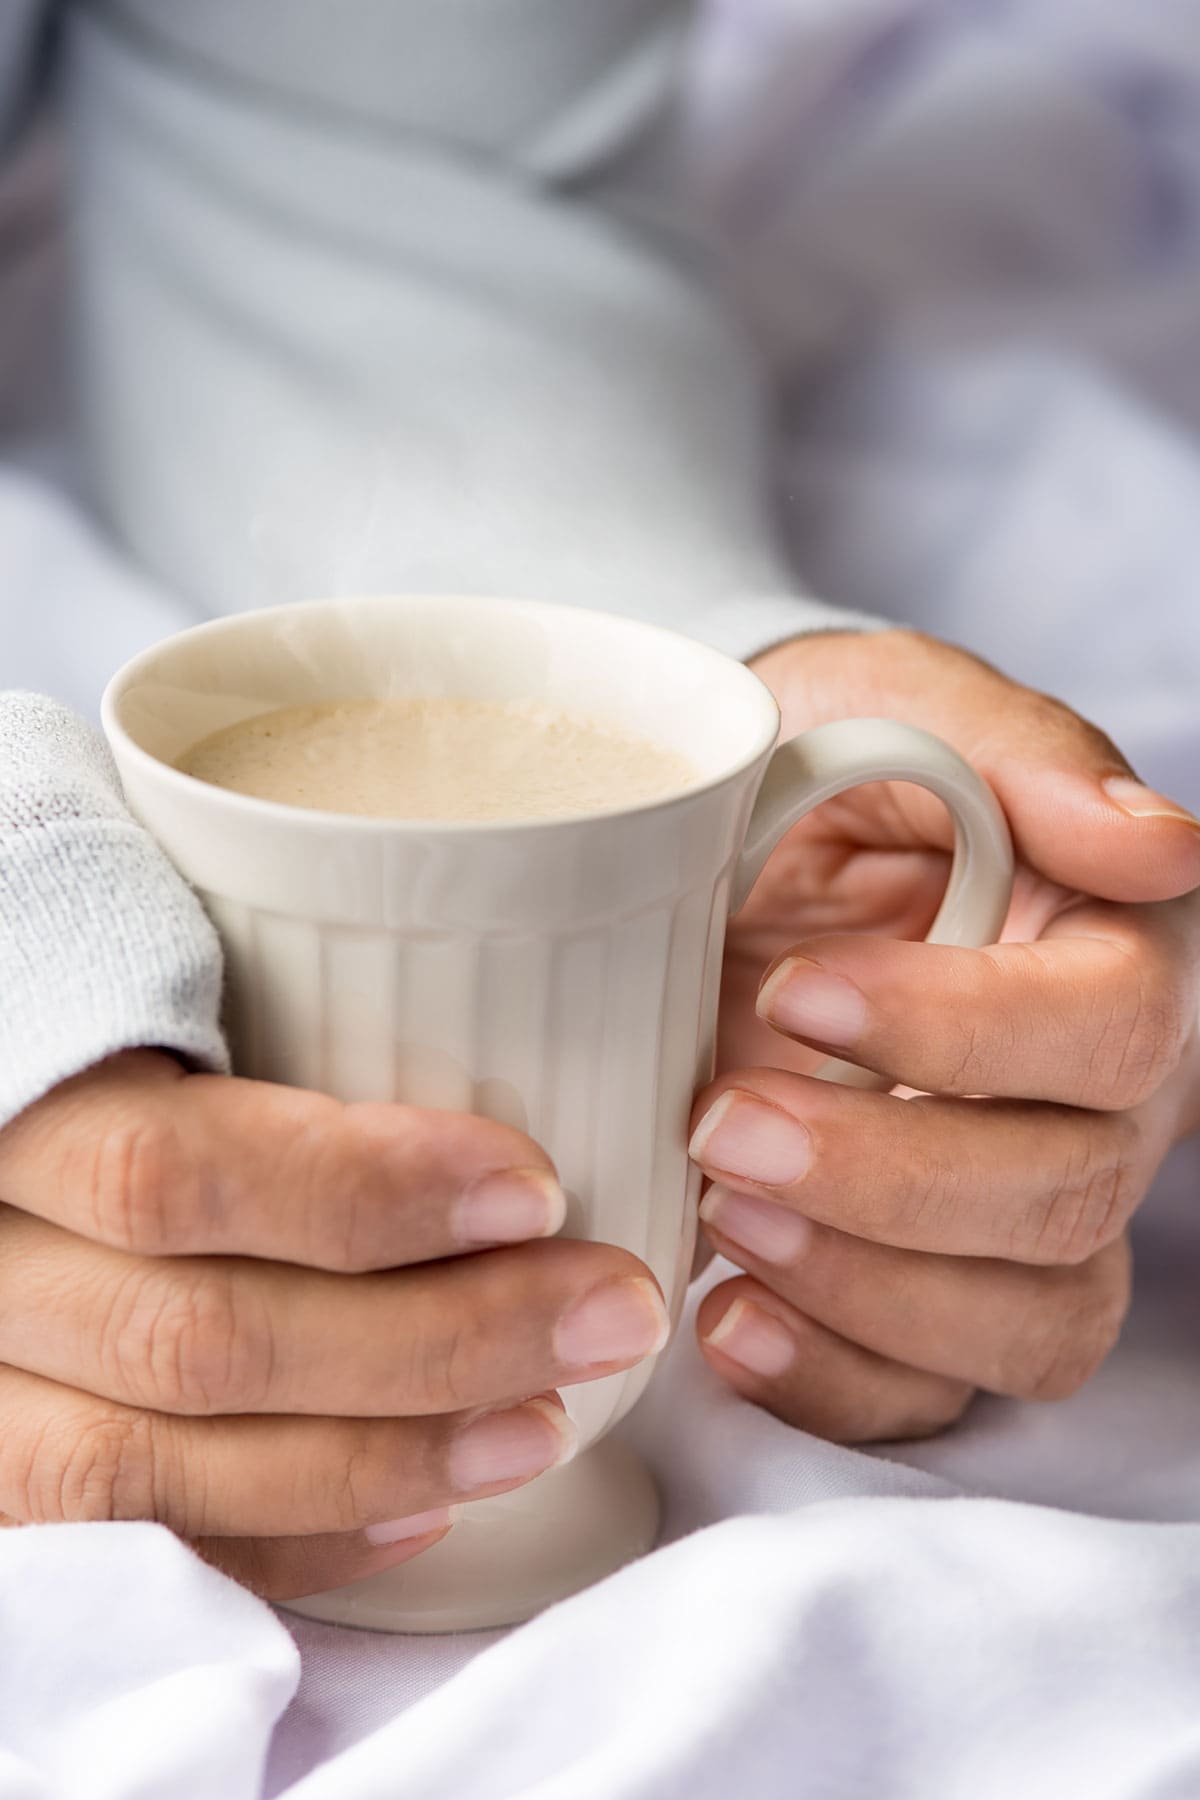 Hands holding a cup of ponche de desayuno (breakfast eggnog).